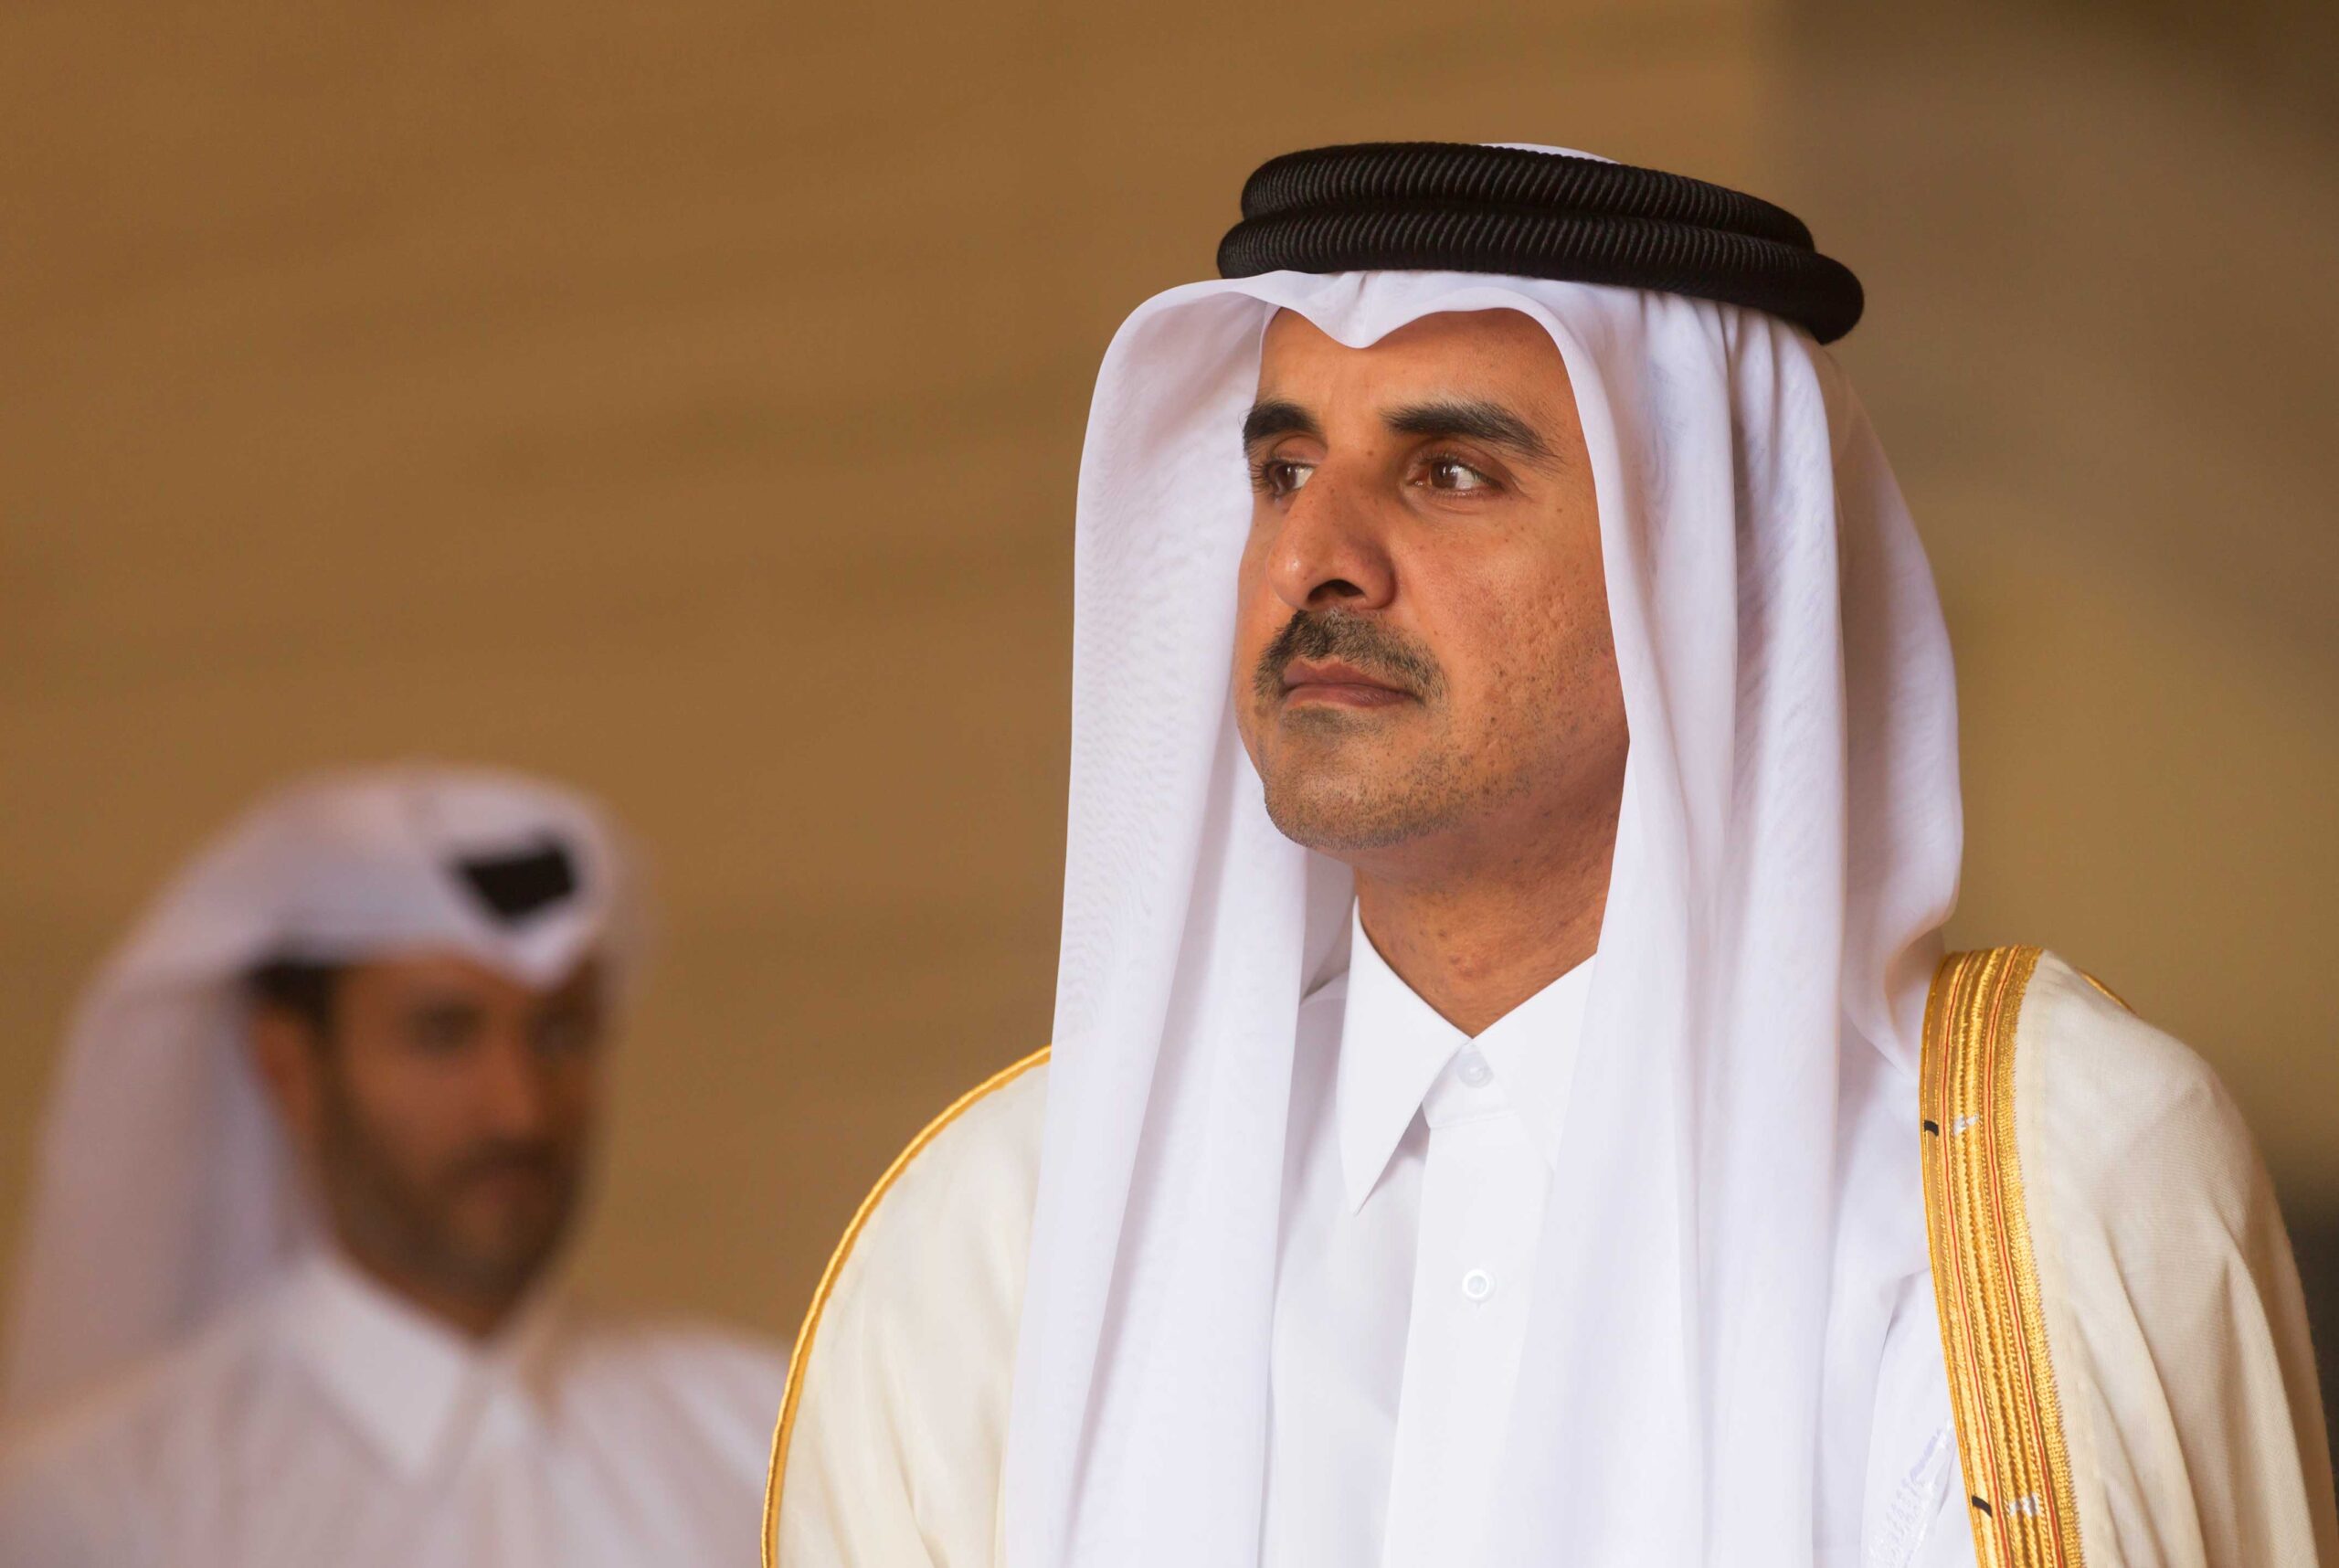 Qatar and the Al Thani